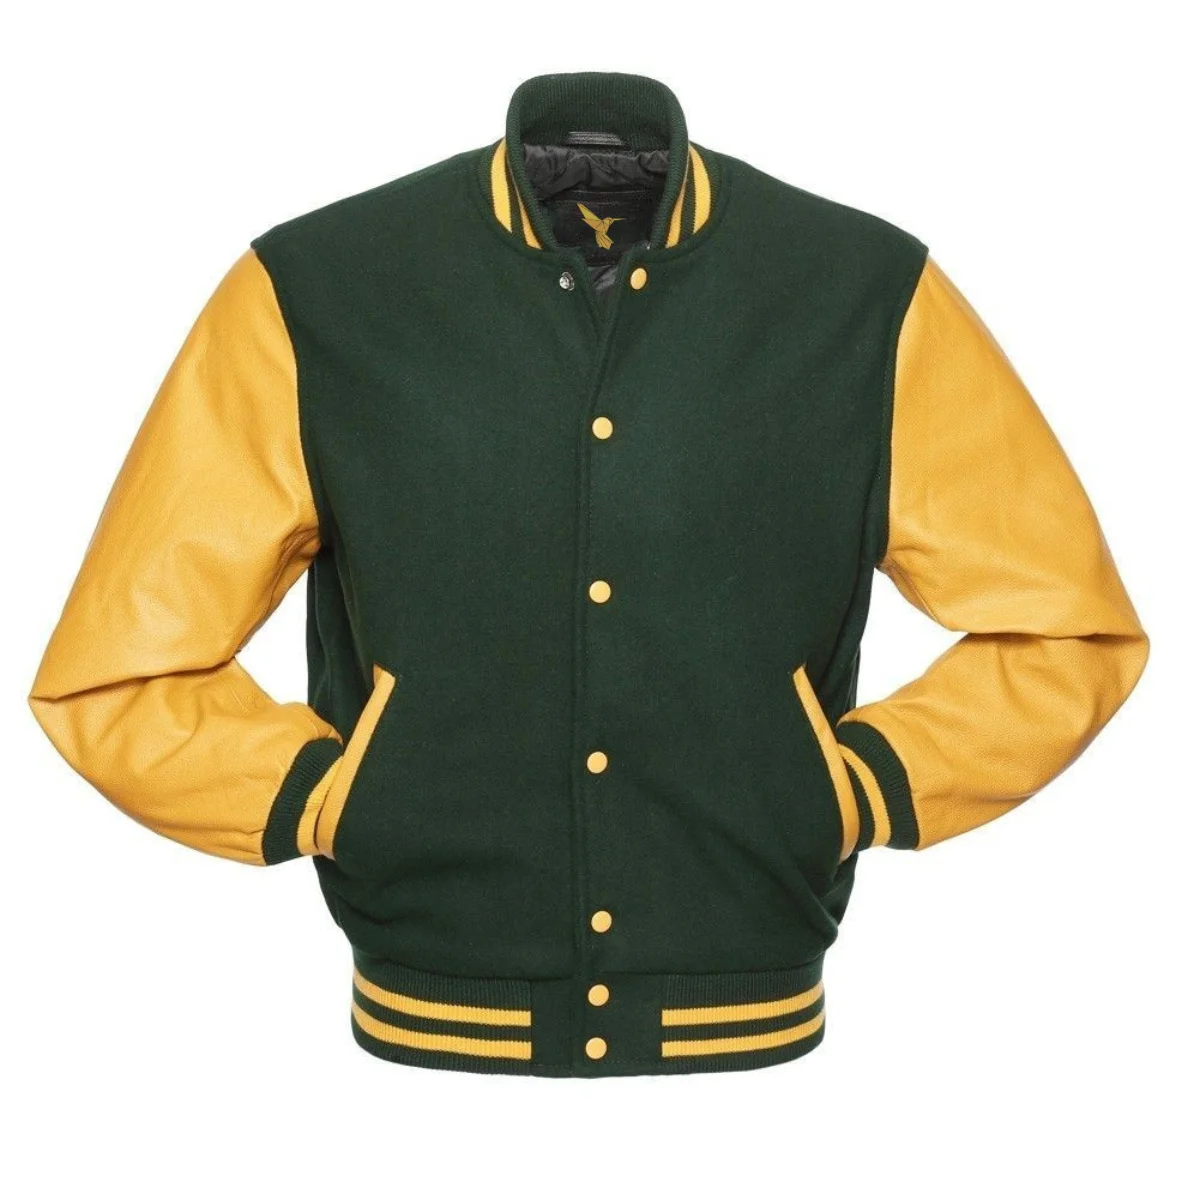 Front Image of Green Varsity Jacket